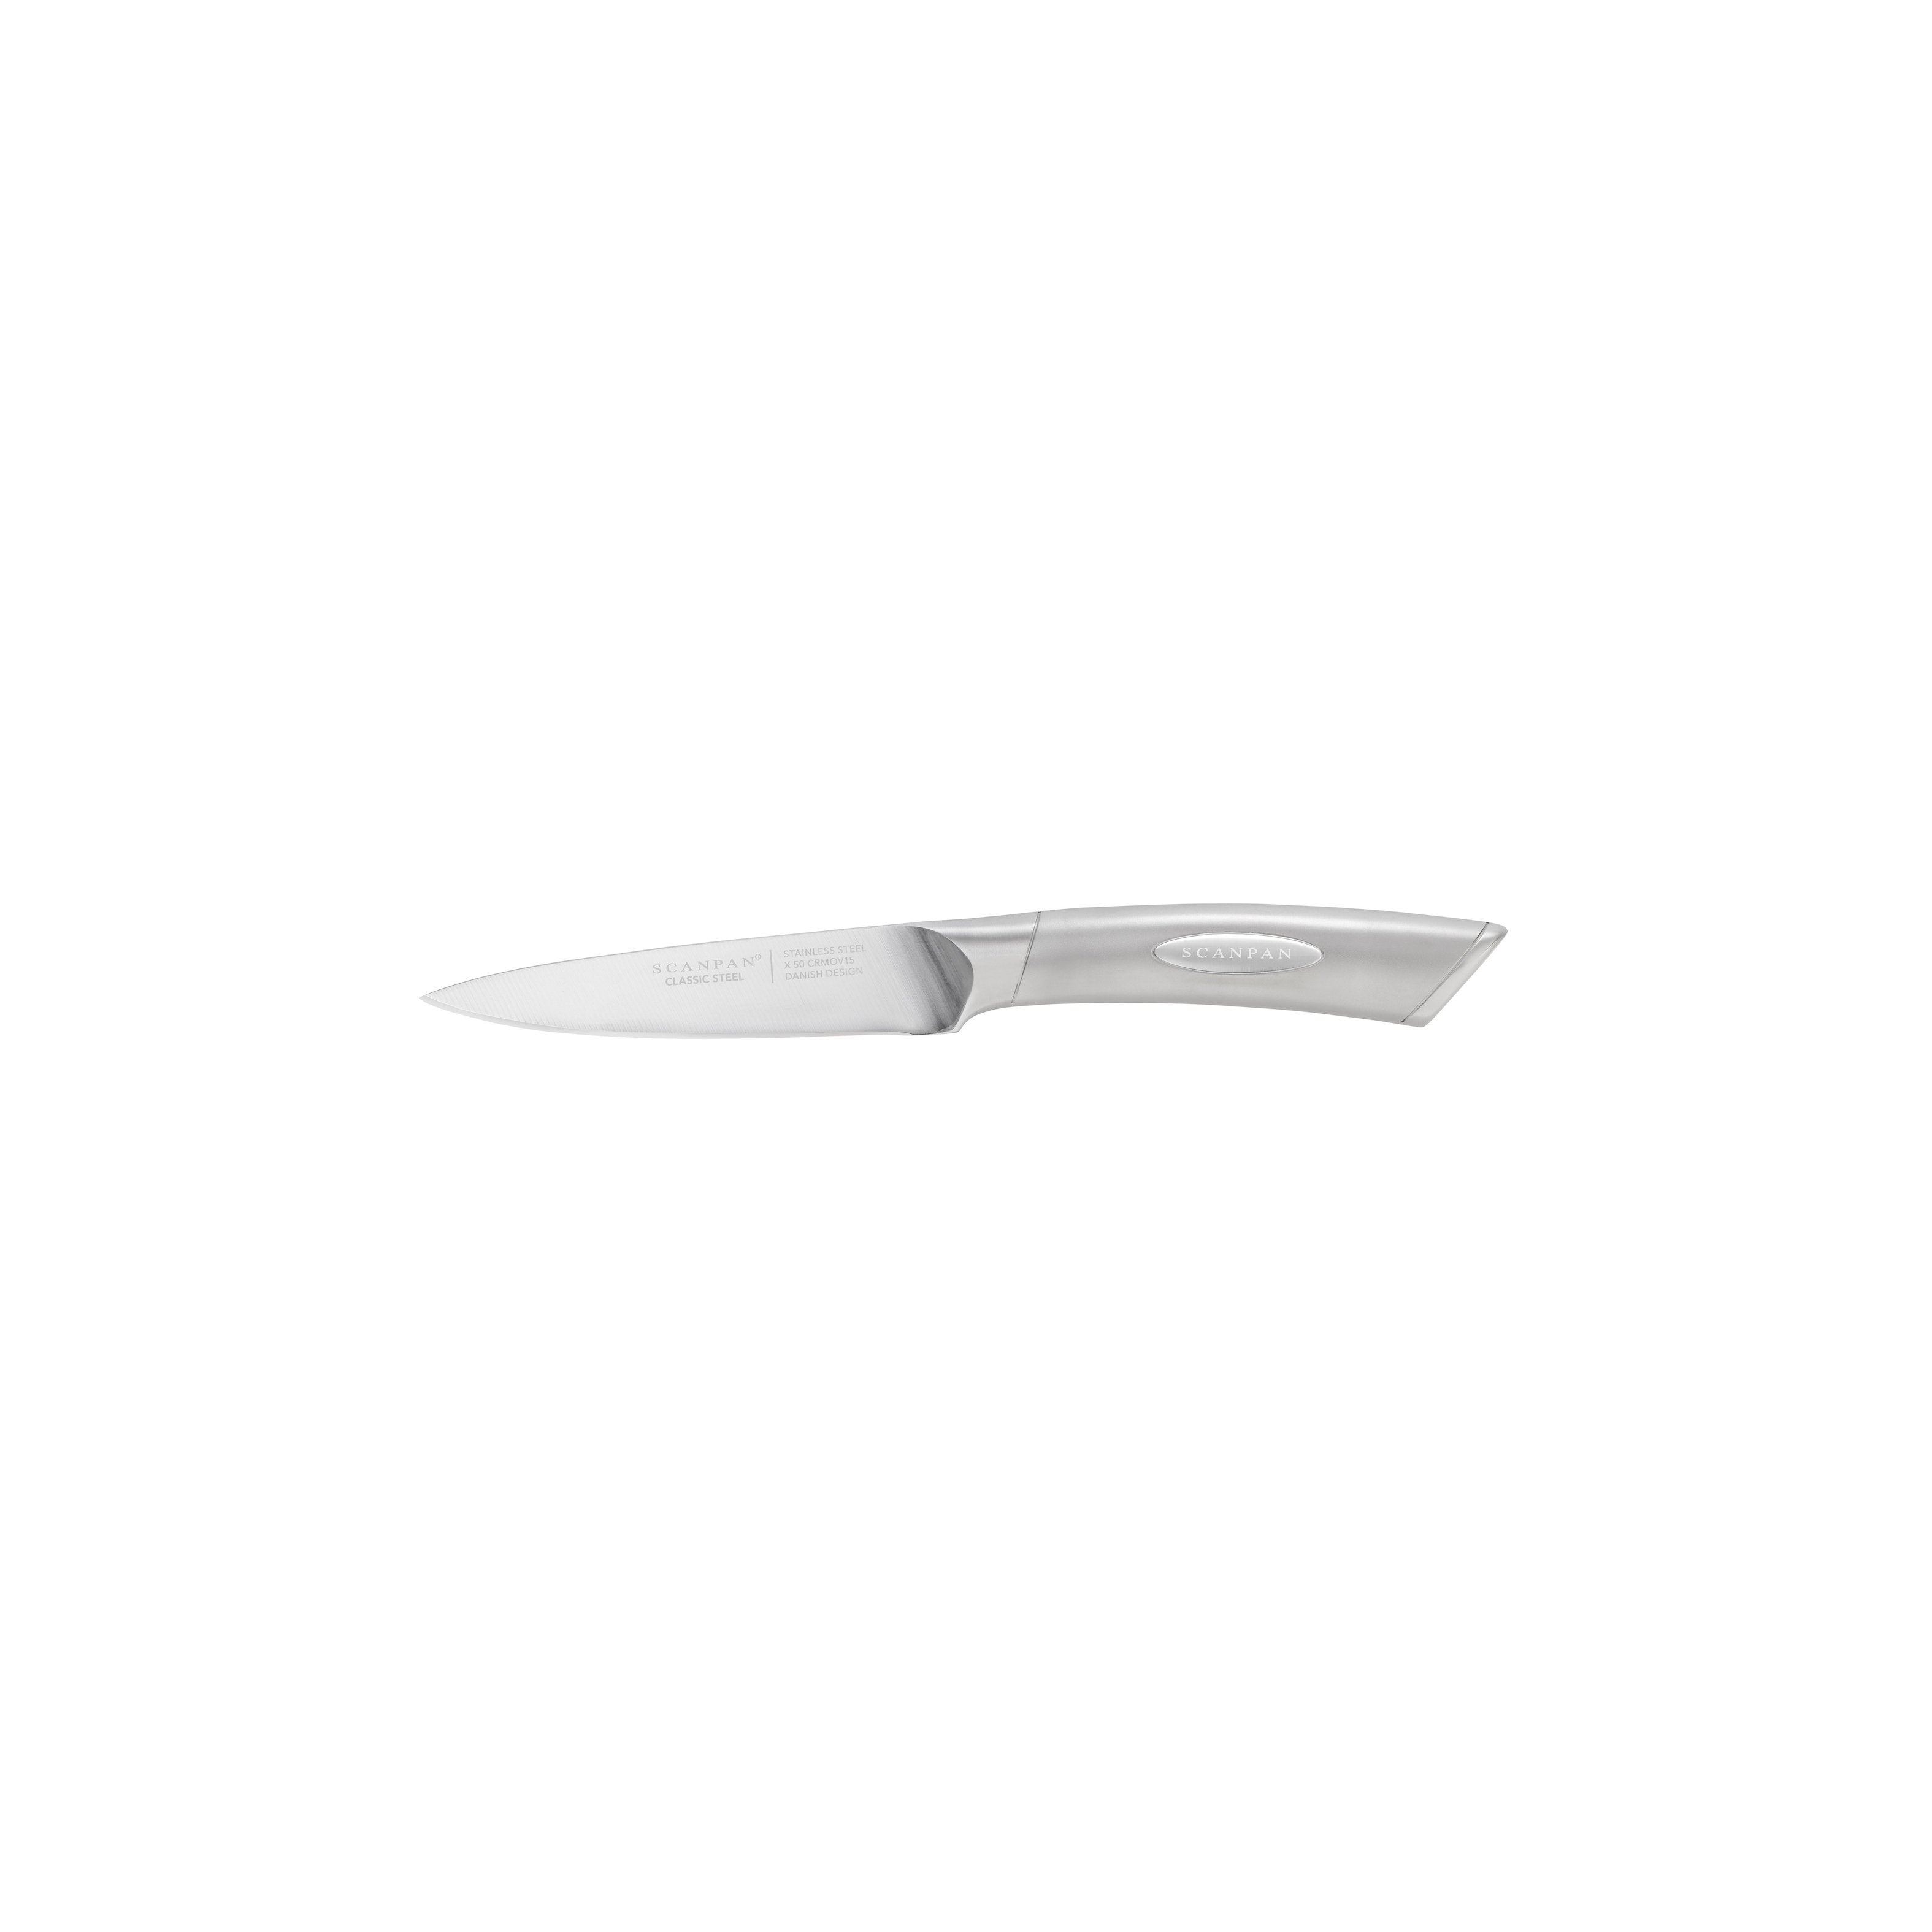 NEW SCANPAN Classic Steel Vegetable Knife 11.5cm